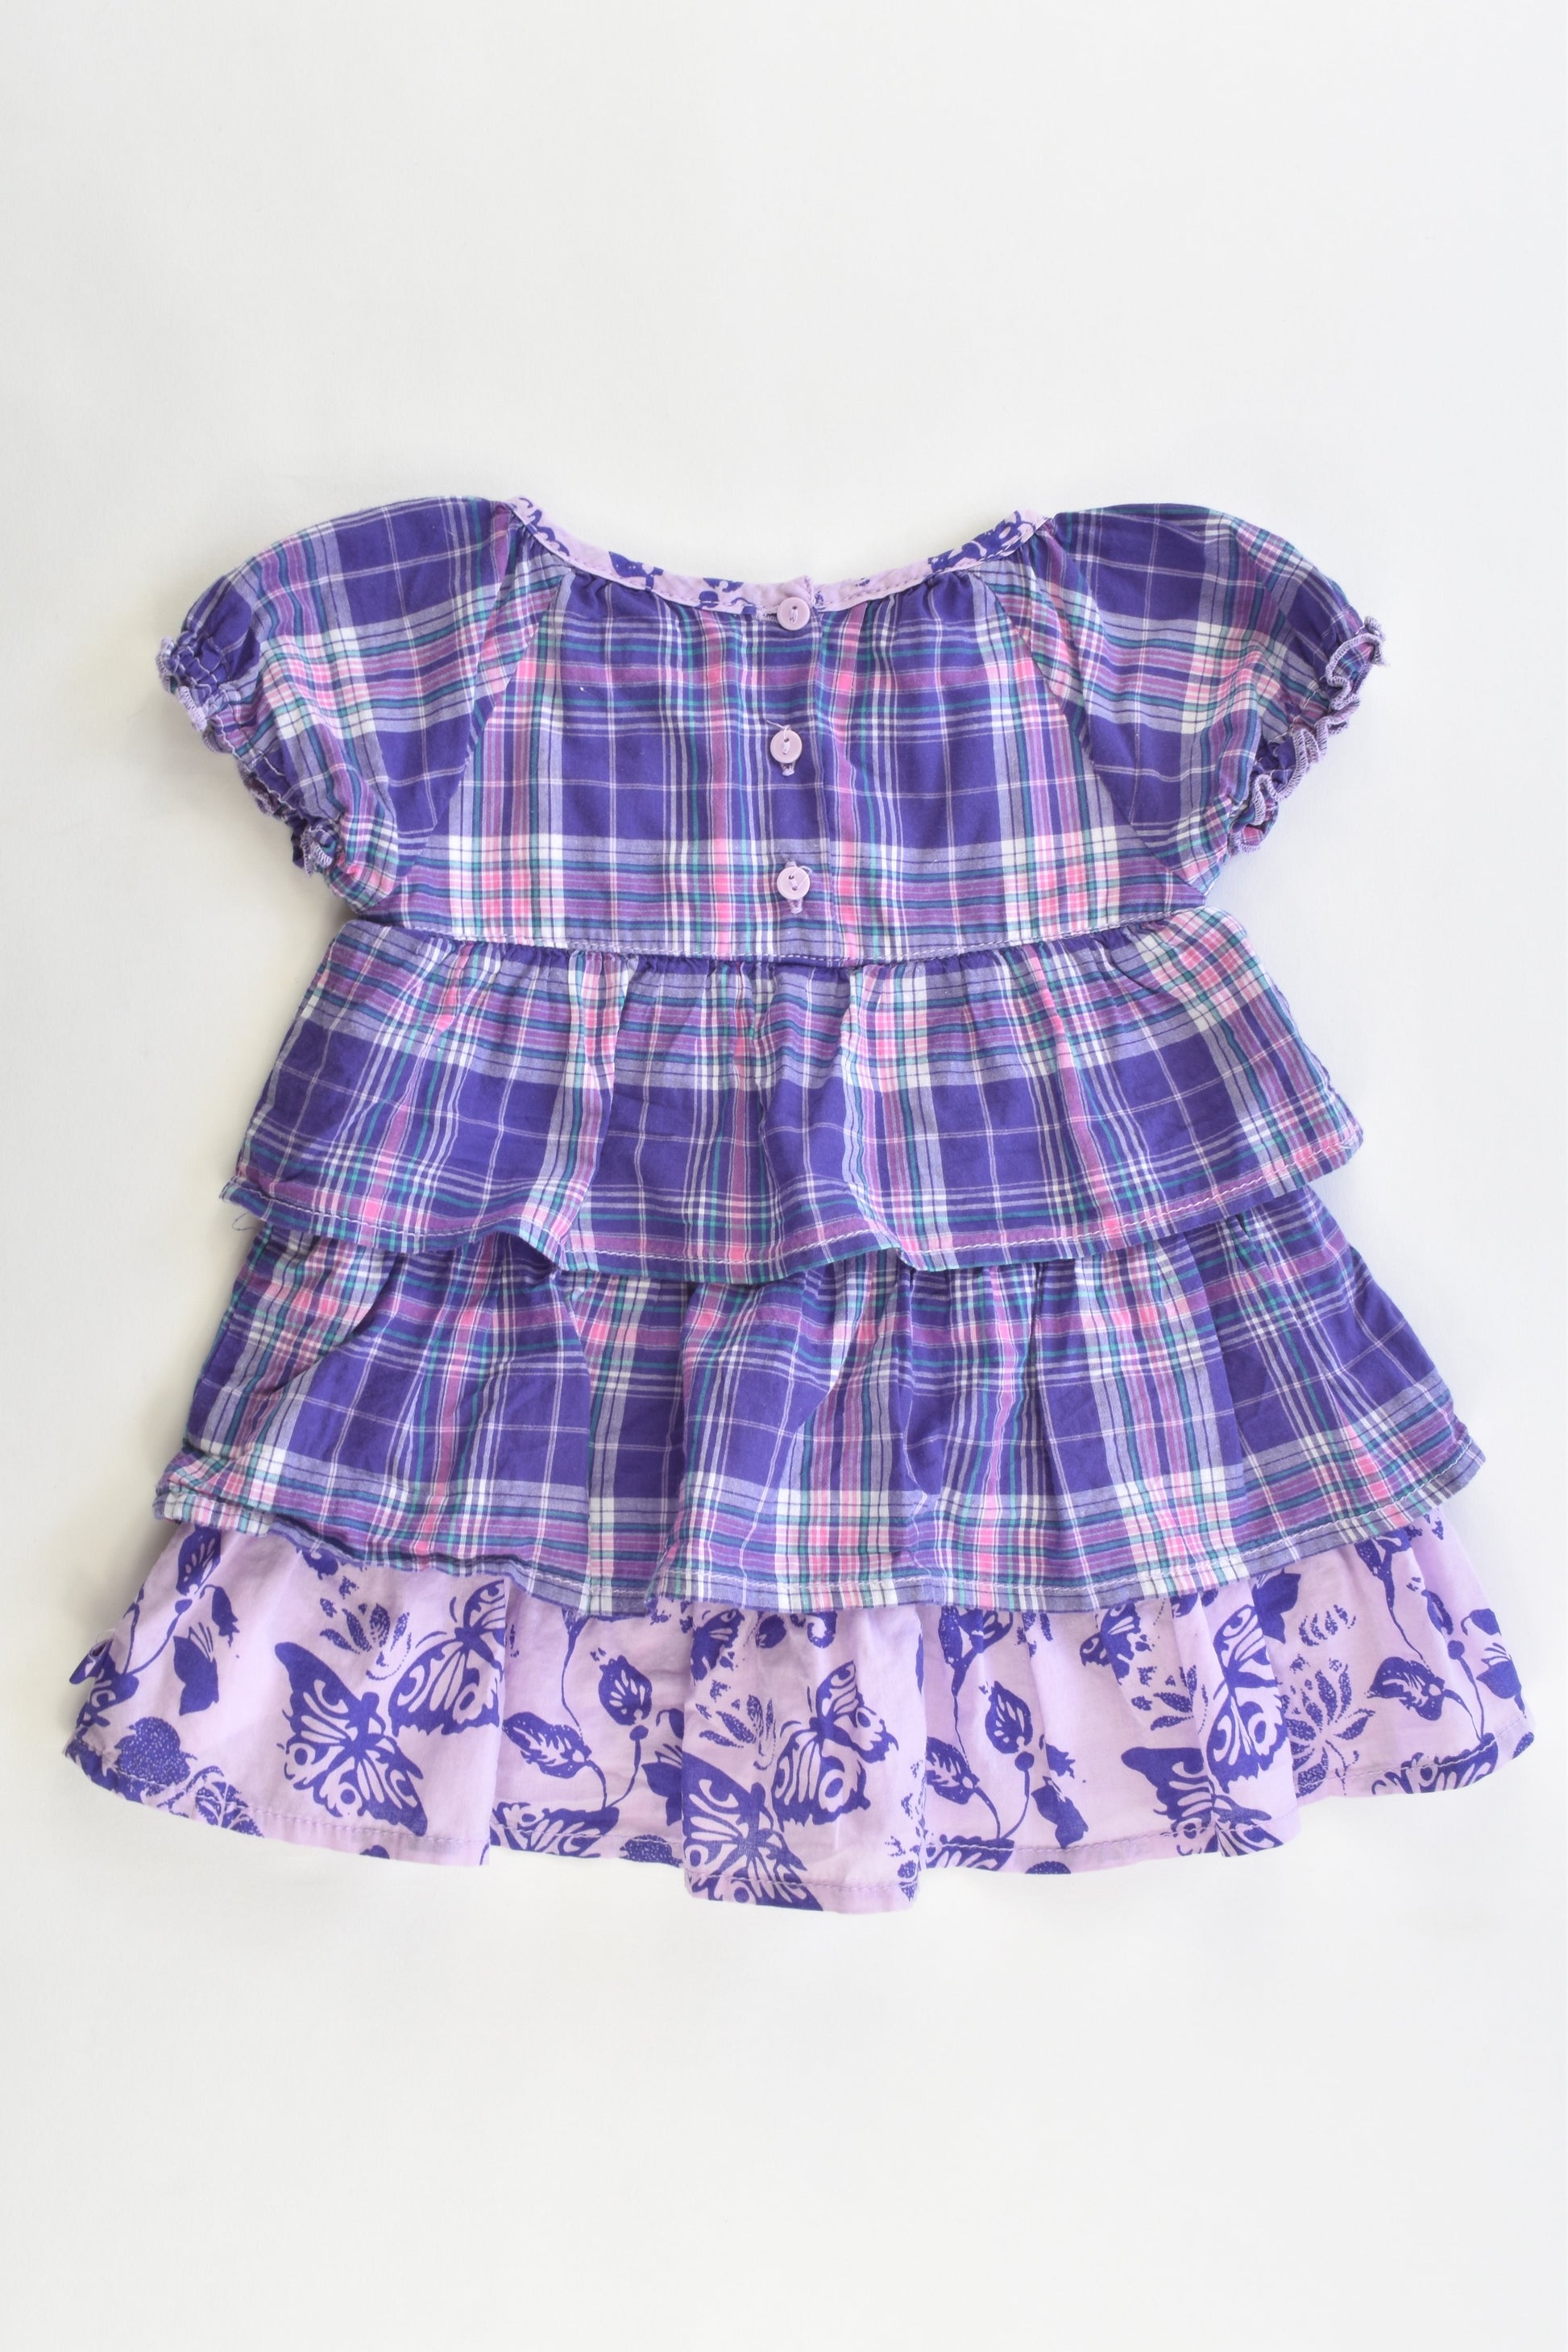 Mexx Size 68 cm (6-9 months) Dress